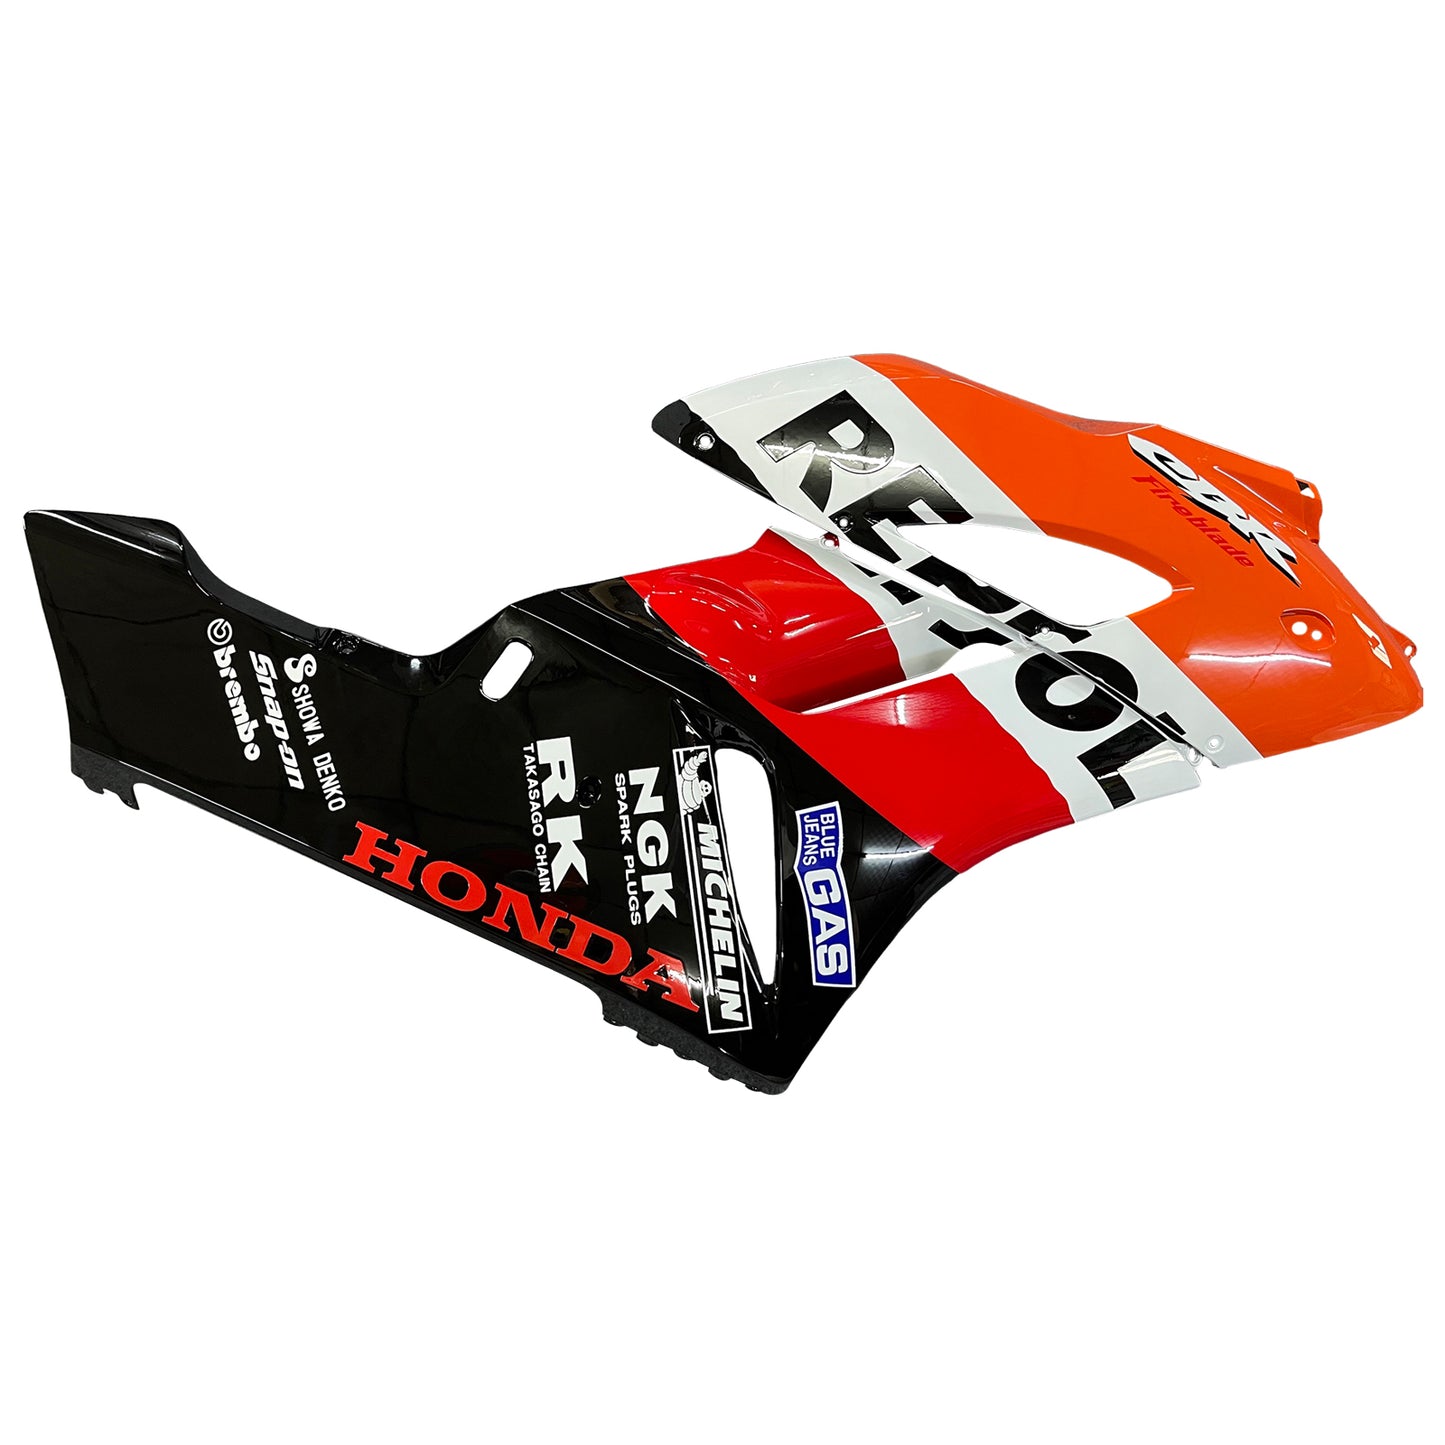 Amotopart-Verkleidungen Honda CBR1000RR 2004-2005 Verziehung Repsol Racing Black Orange Abzugskit